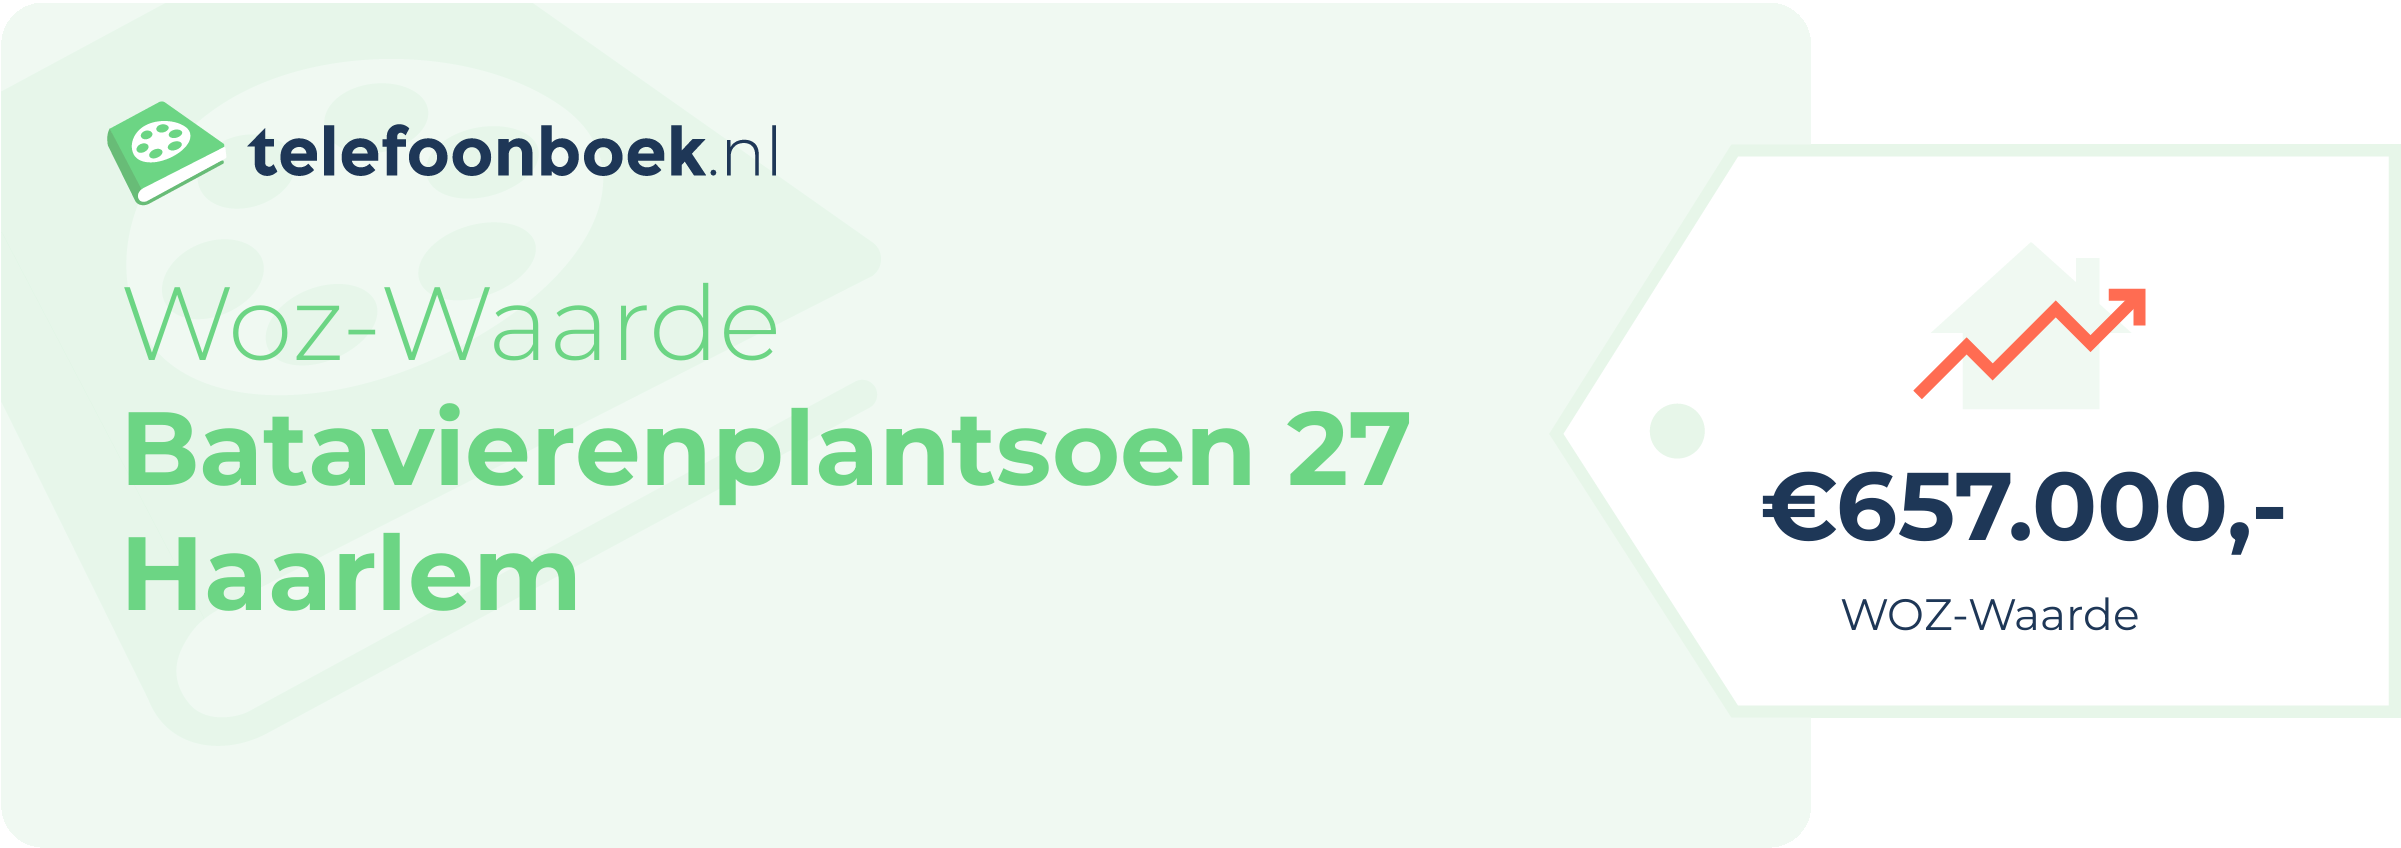 WOZ-waarde Batavierenplantsoen 27 Haarlem